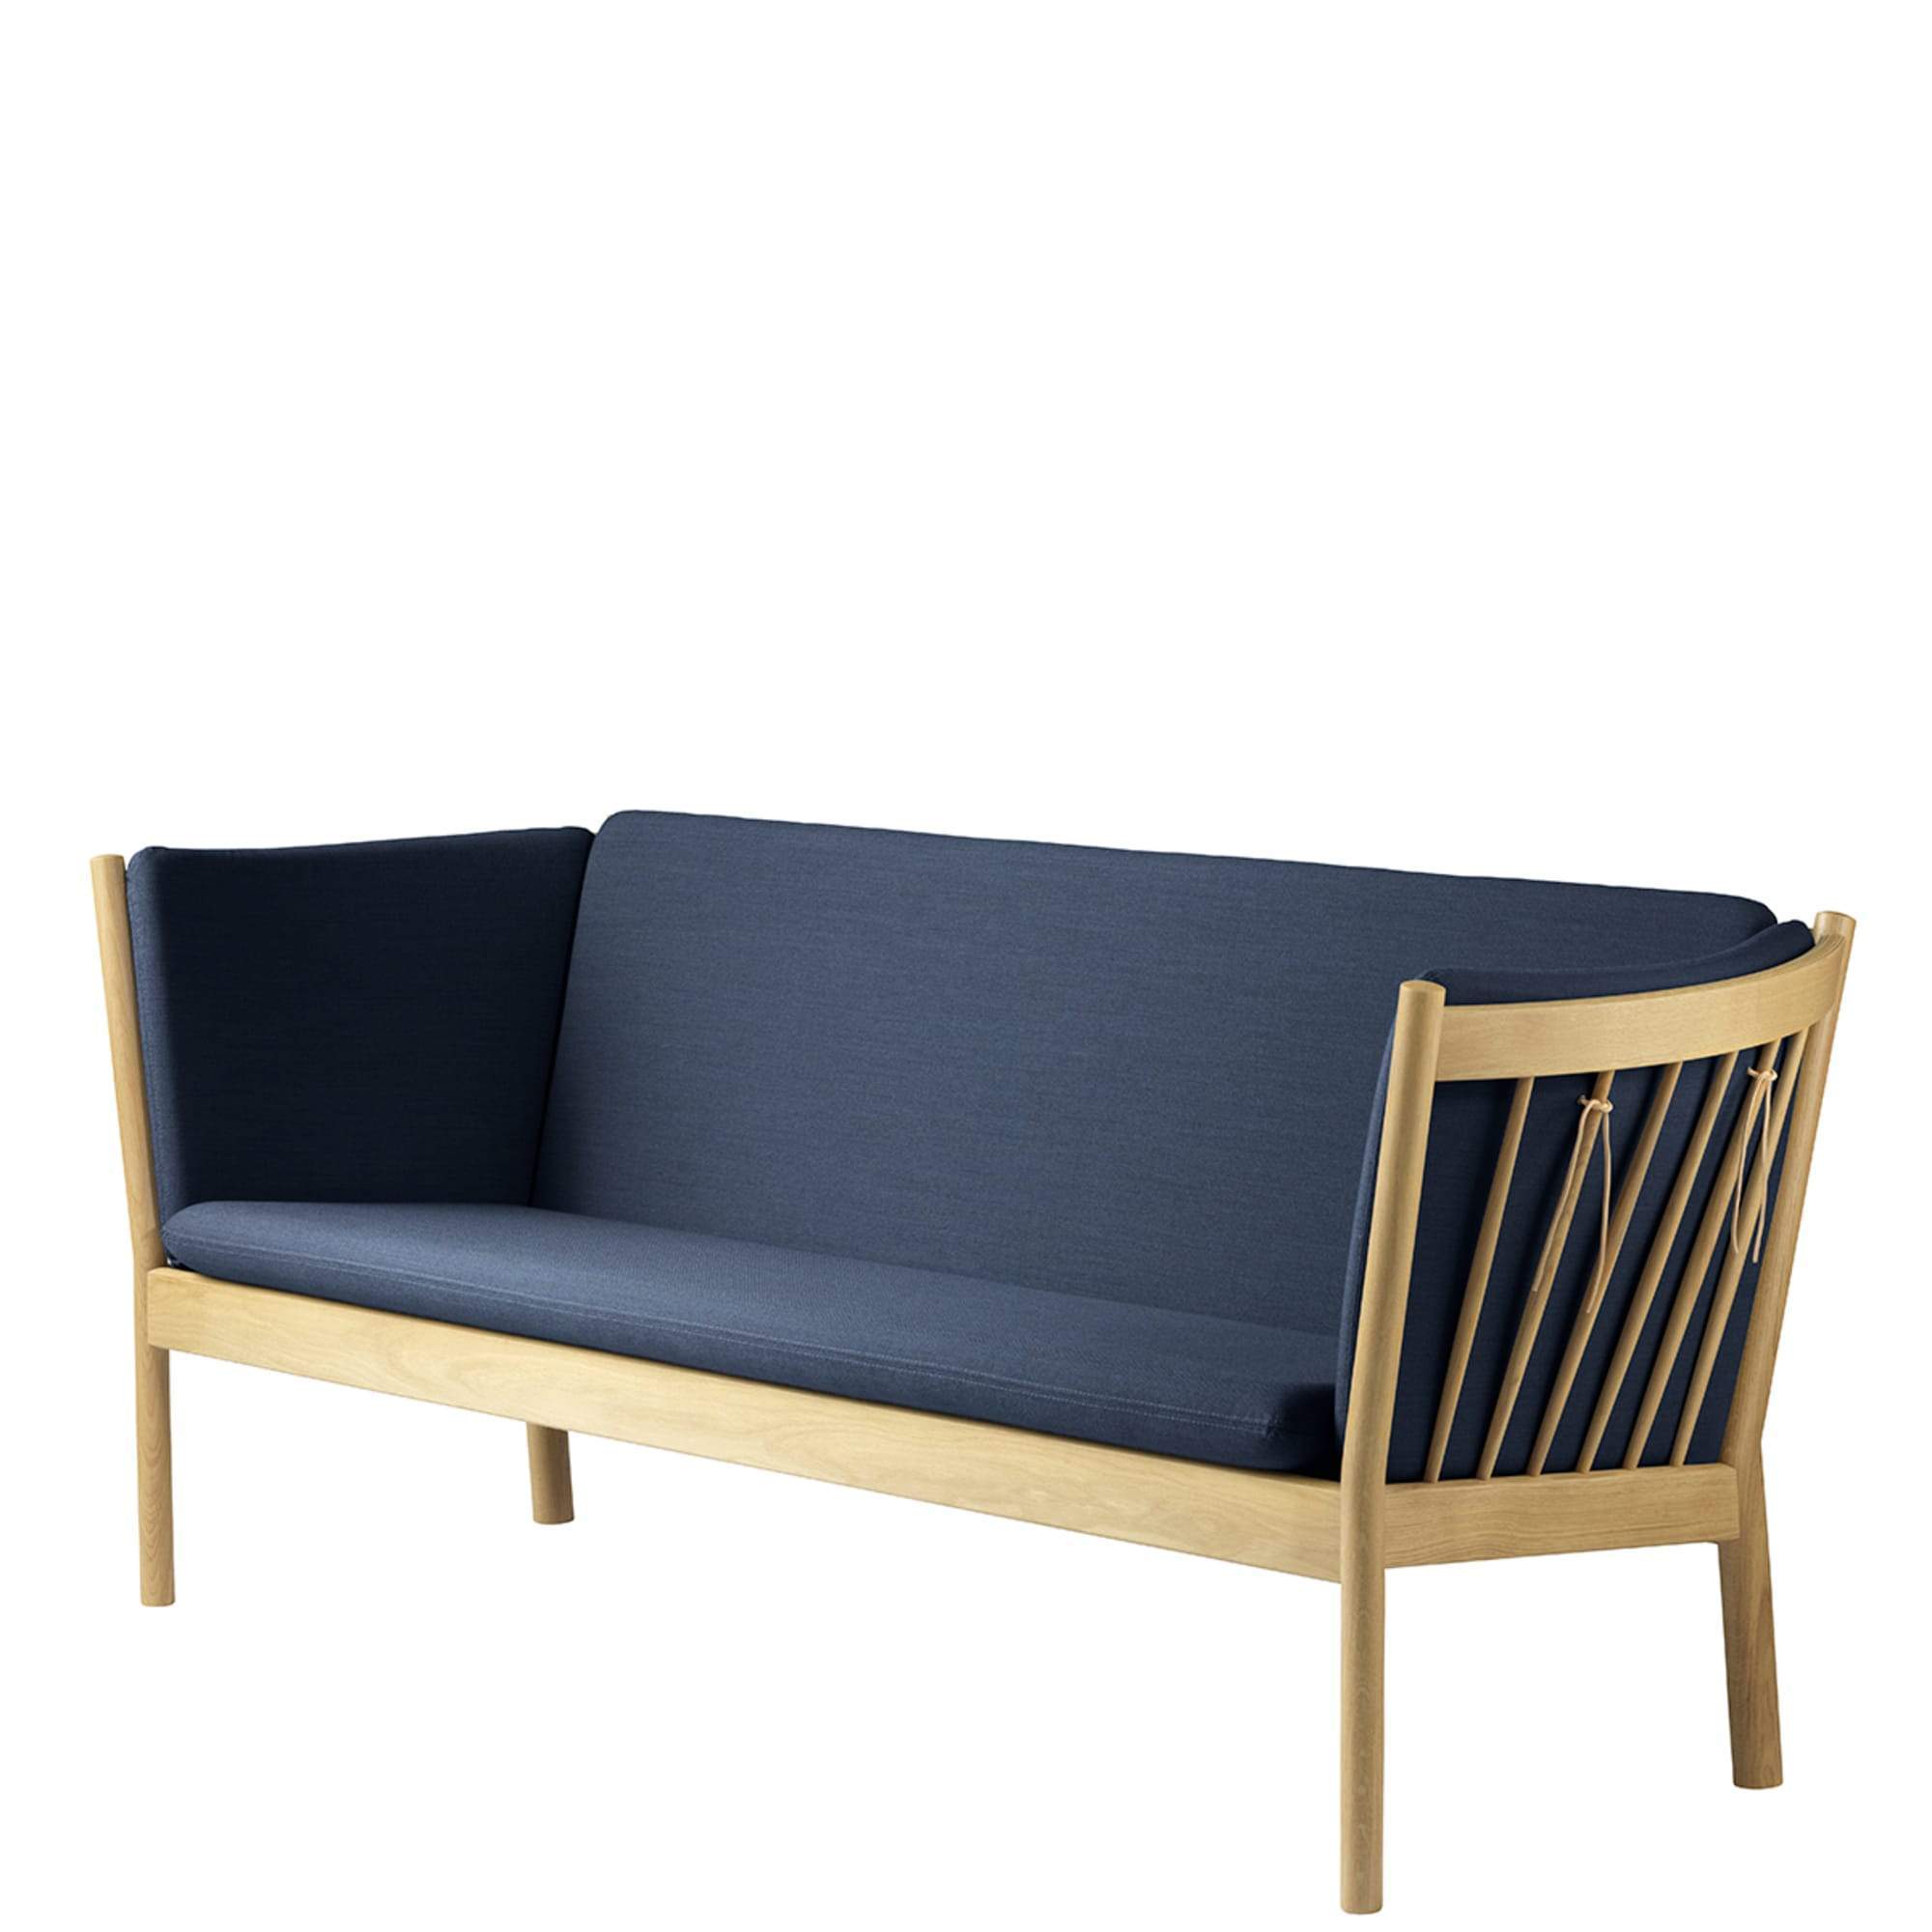 FDB Møbler J149 di divano a 3 persone, quercia, tessuto blu scuro